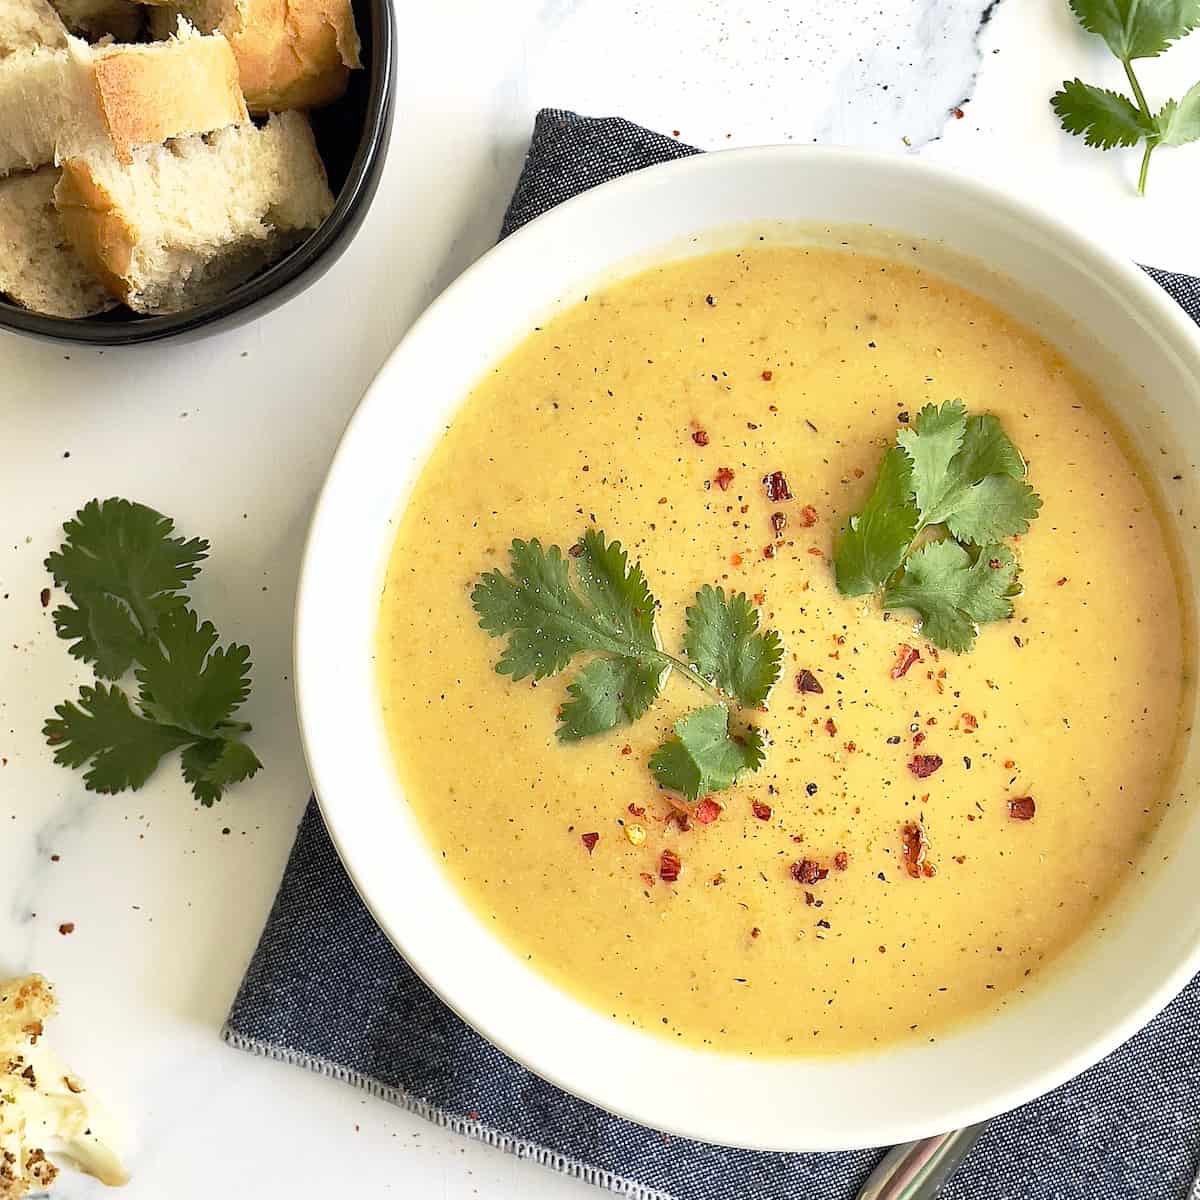 https://tastyoven.com/wp-content/uploads/2022/03/instantpot-cauliflower-soup-image.jpg